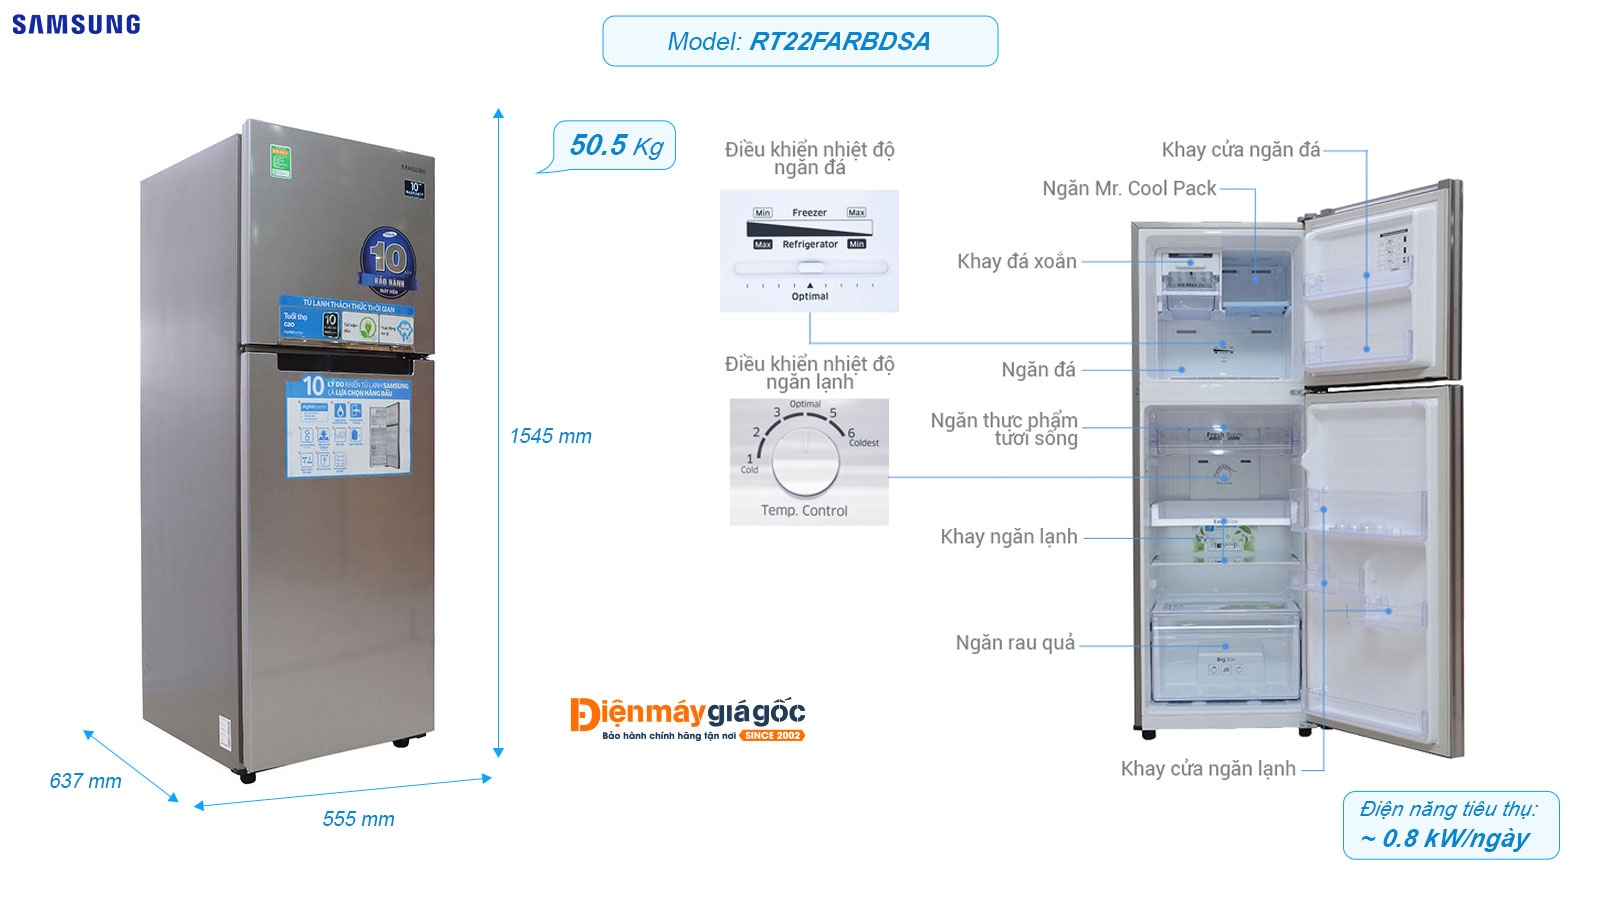 Samsung inverter fridge 234 liters RT22FARBDSA